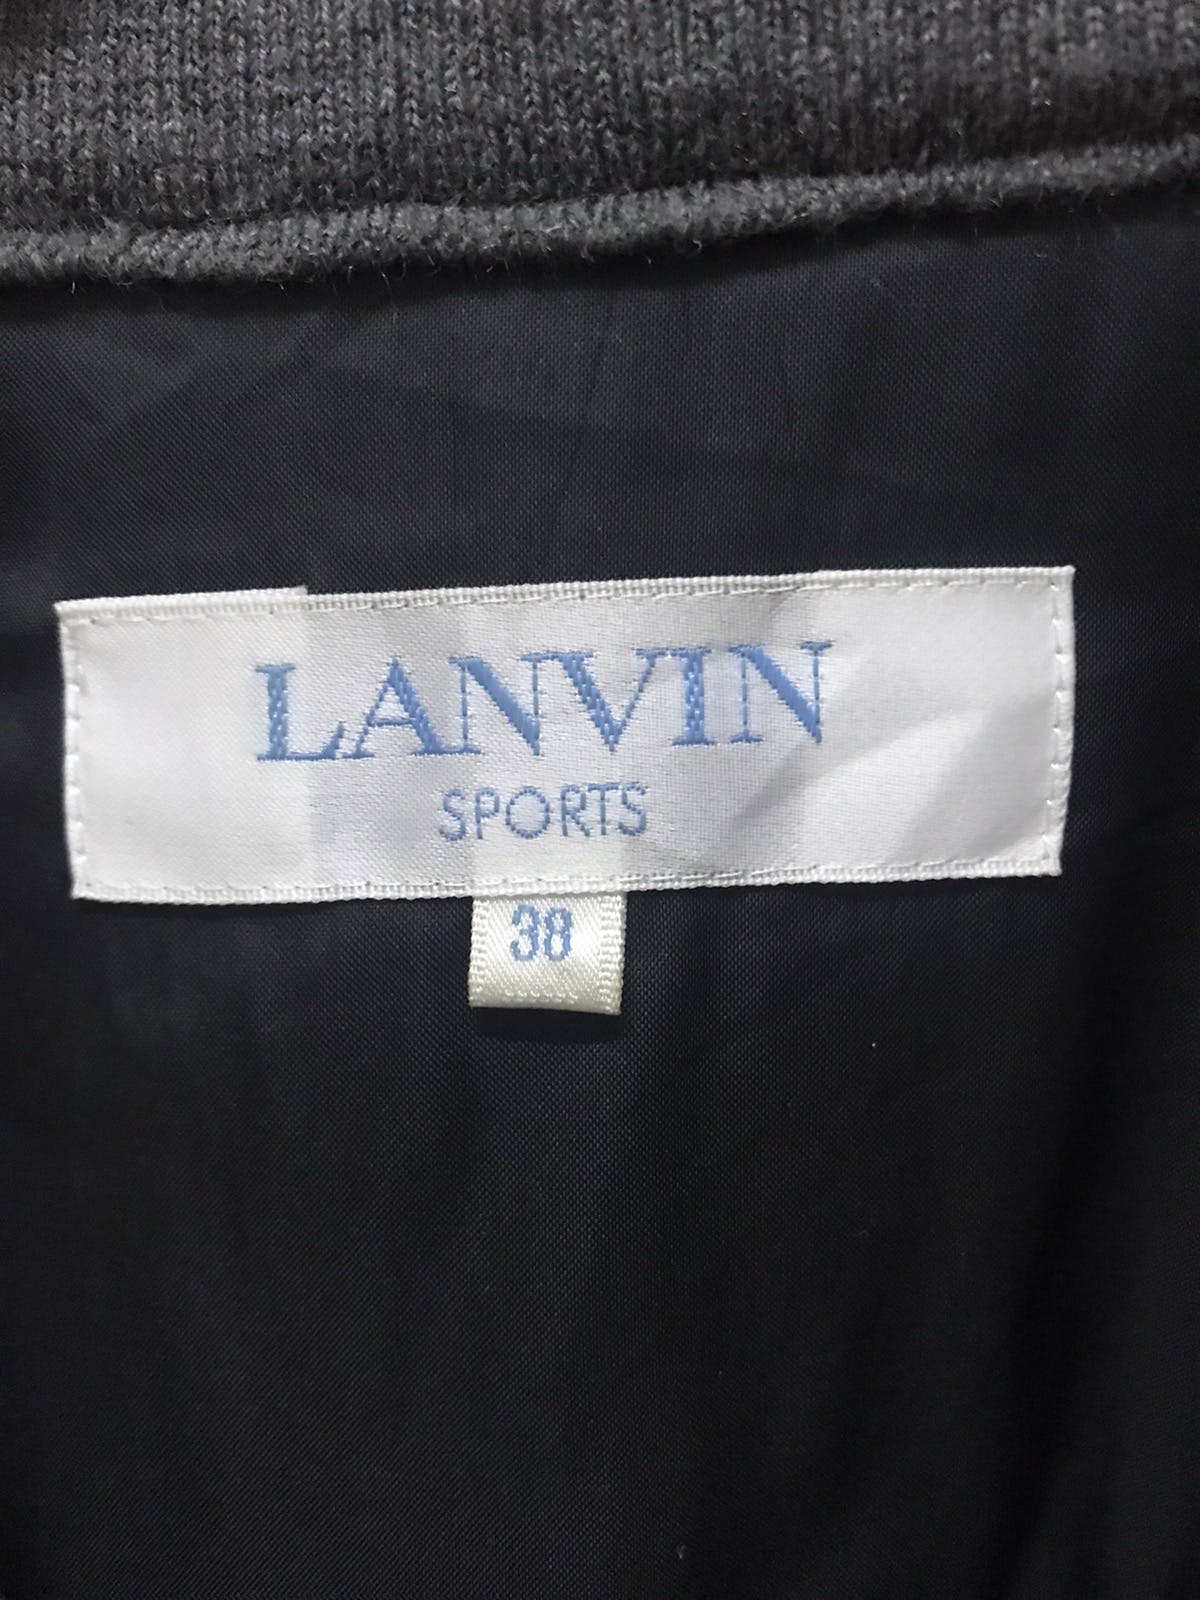 Lanvin sport fleece half zipper - 10